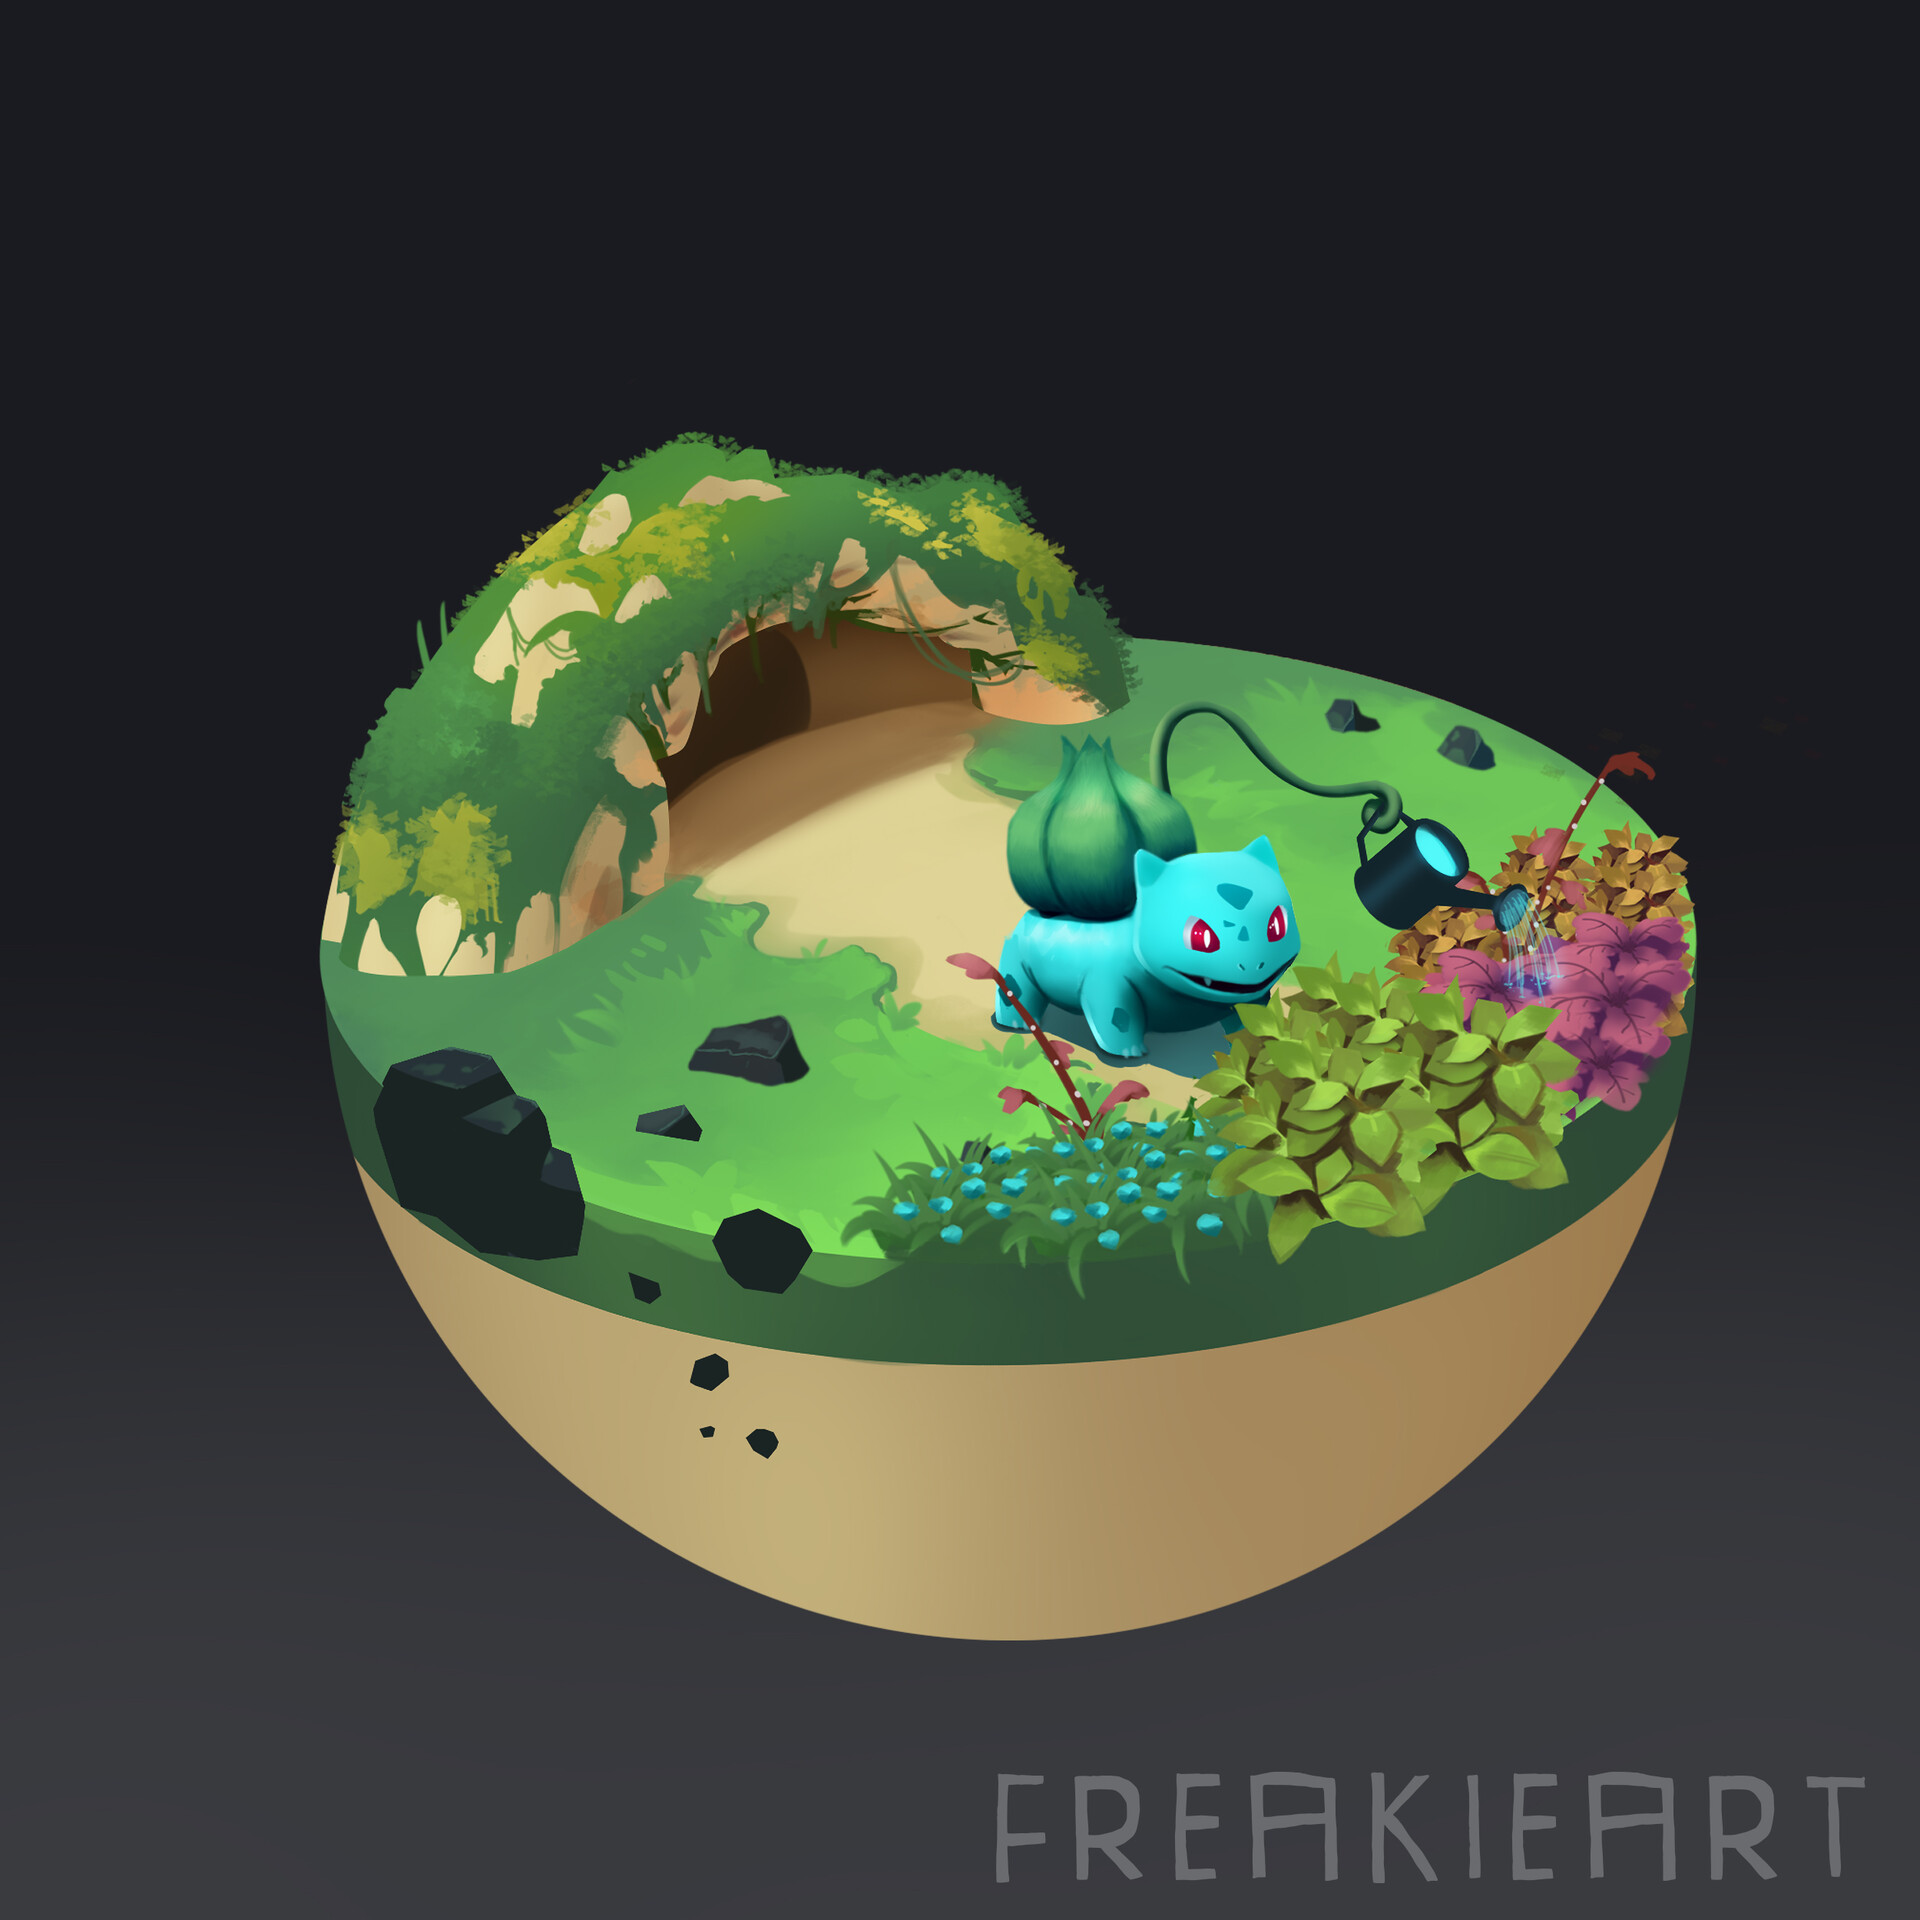 Poke ball Home by LeafyBrush on DeviantArt